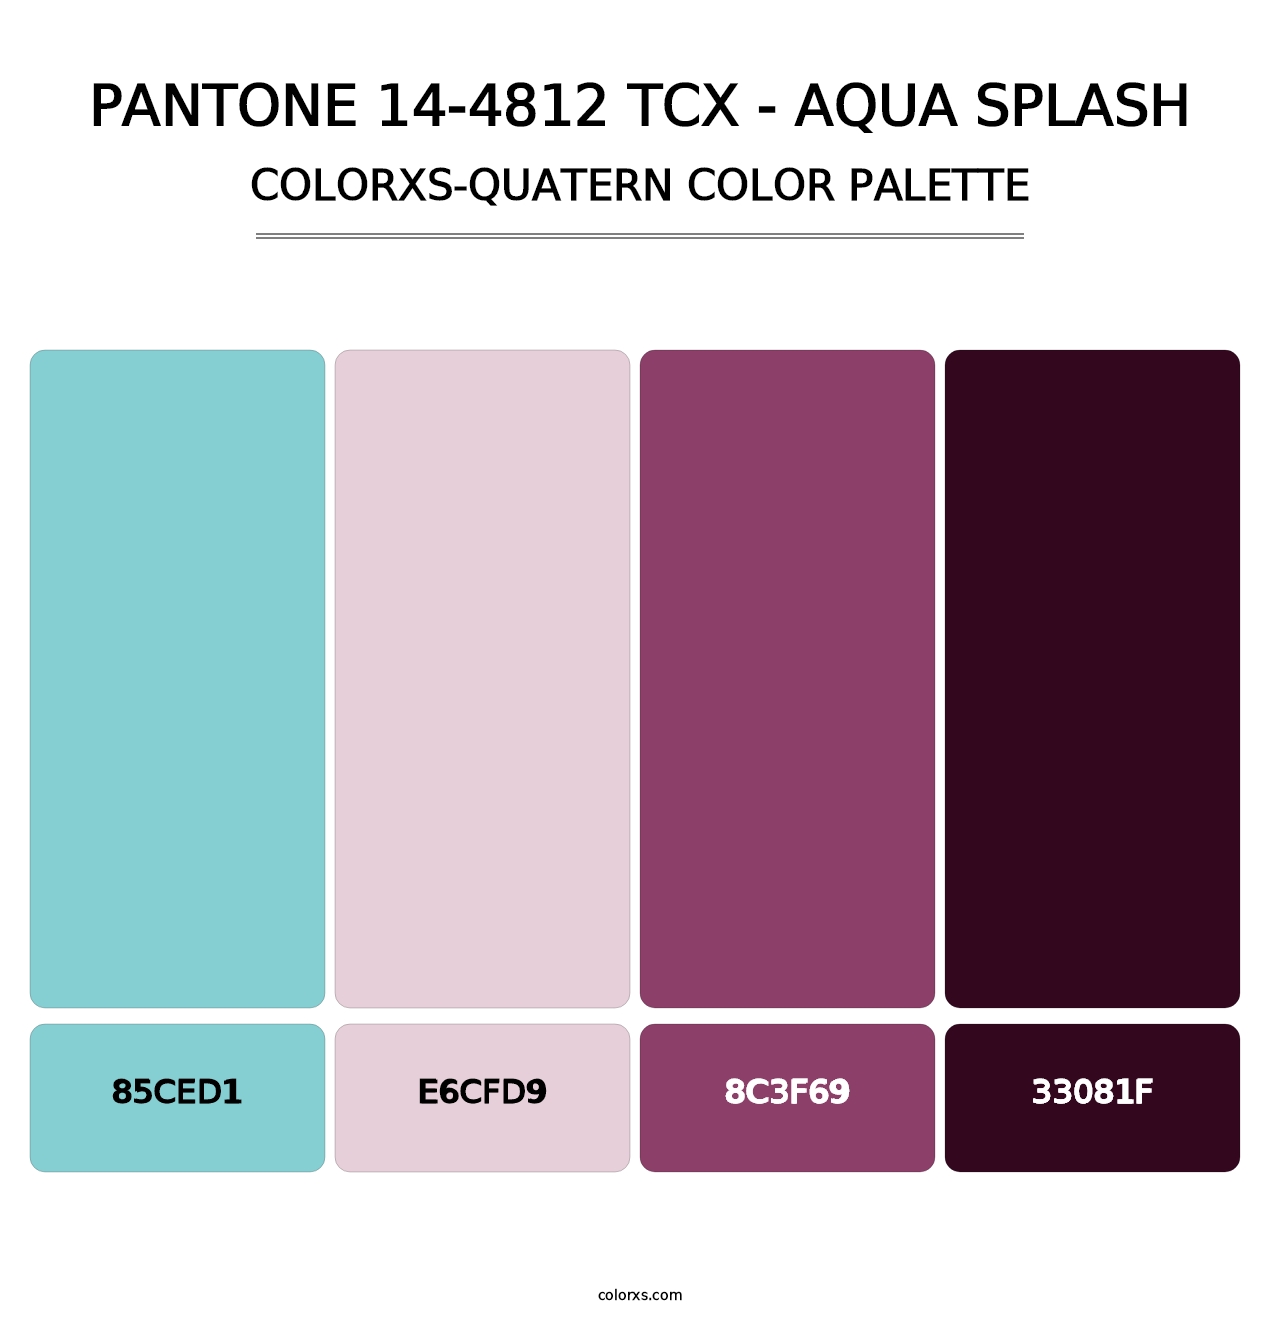 PANTONE 14-4812 TCX - Aqua Splash - Colorxs Quatern Palette